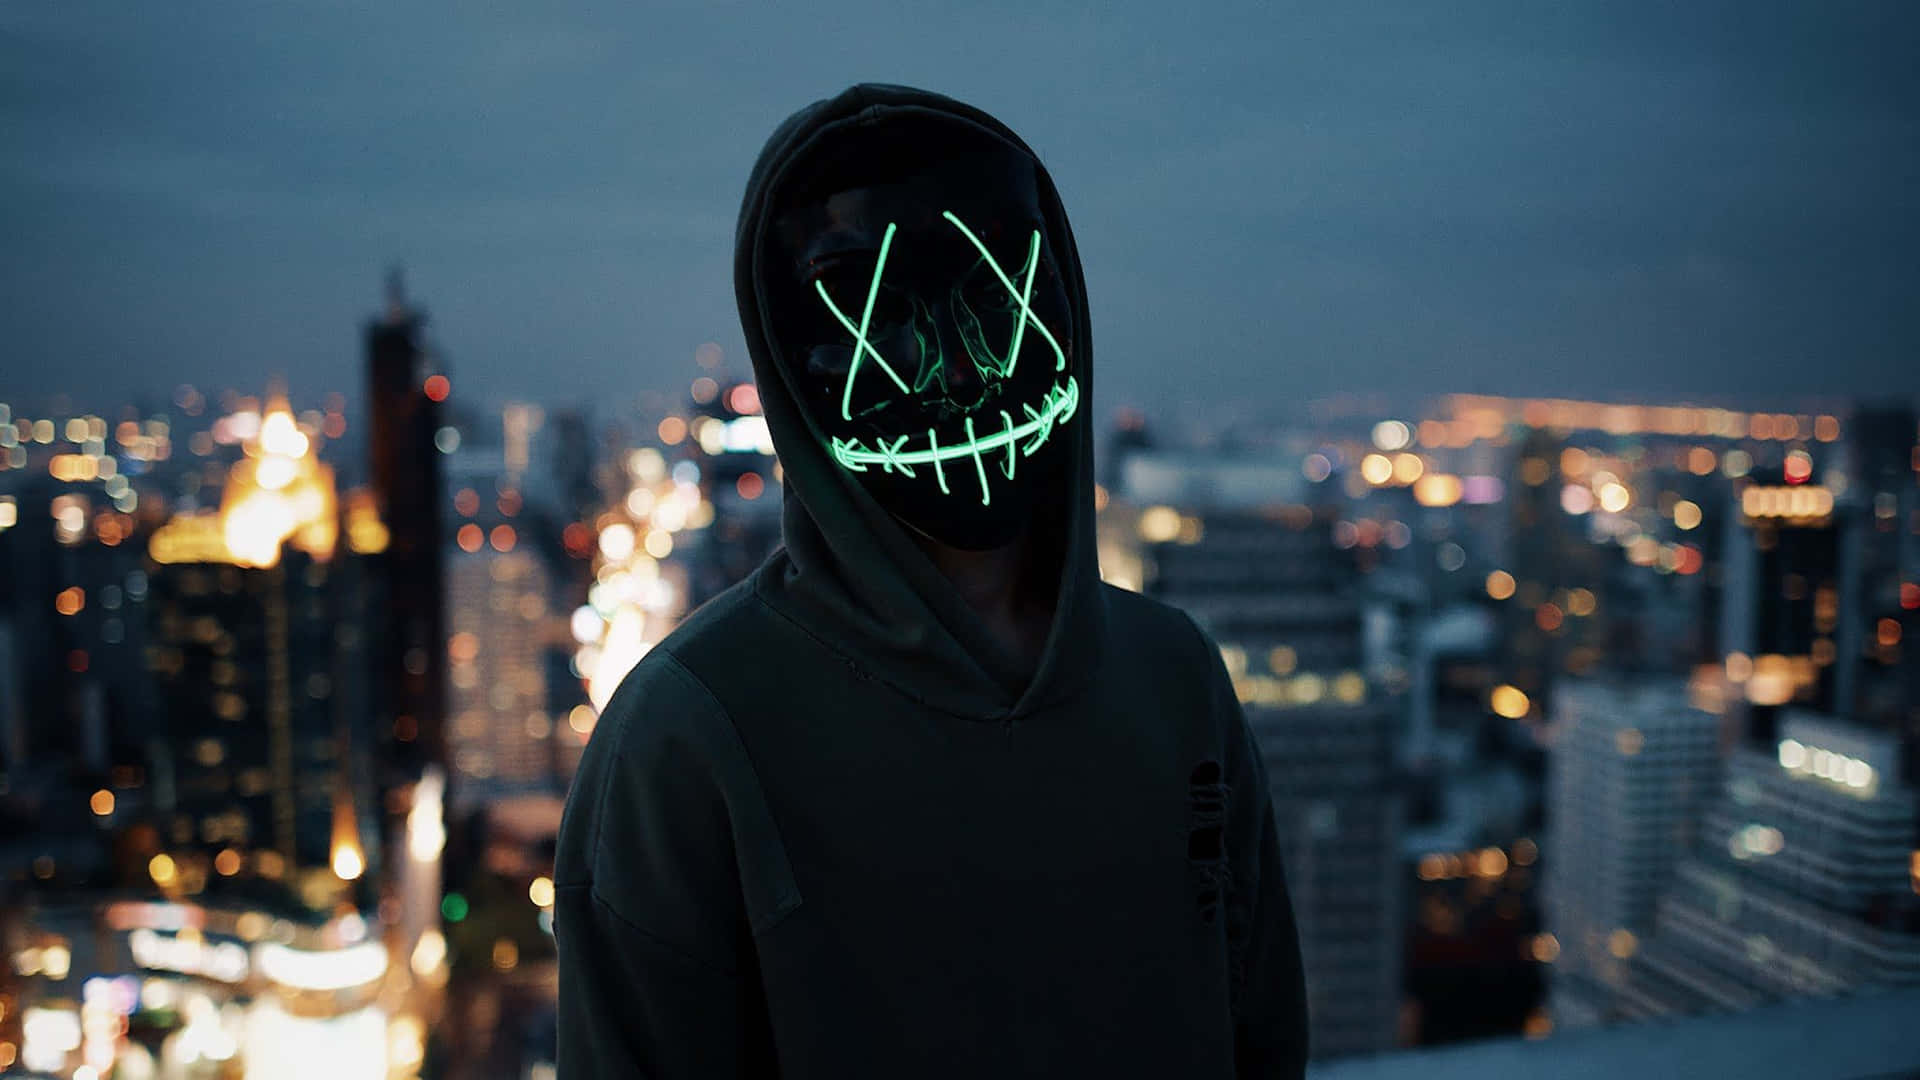 Neon Mask Wallpaper 4K, Man in Black, Dark background